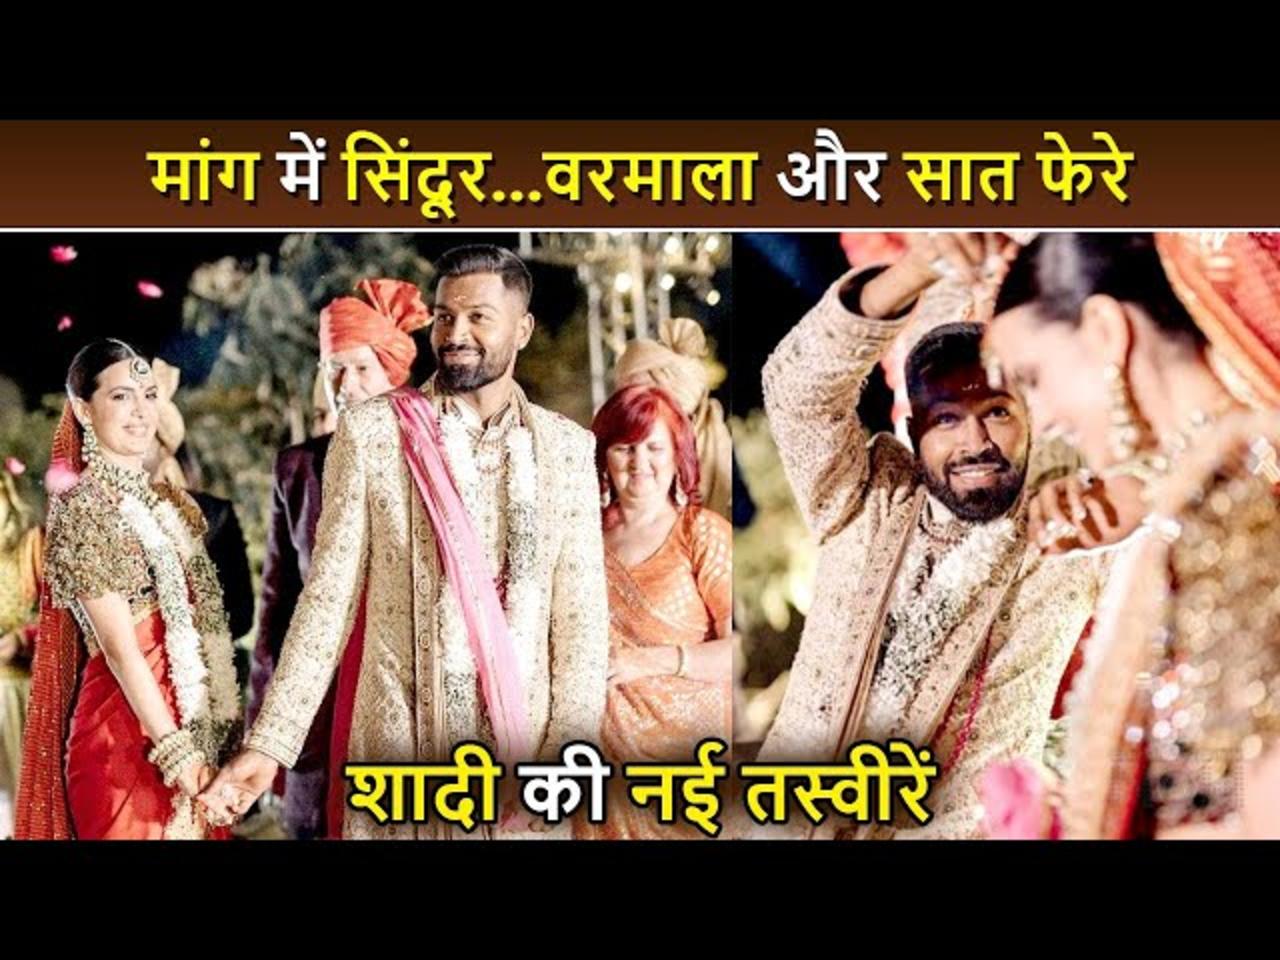 Hardik Pandya Natasa Stankovic UNSEEN Royal Hindu Wedding Pictures Out From Udaipur